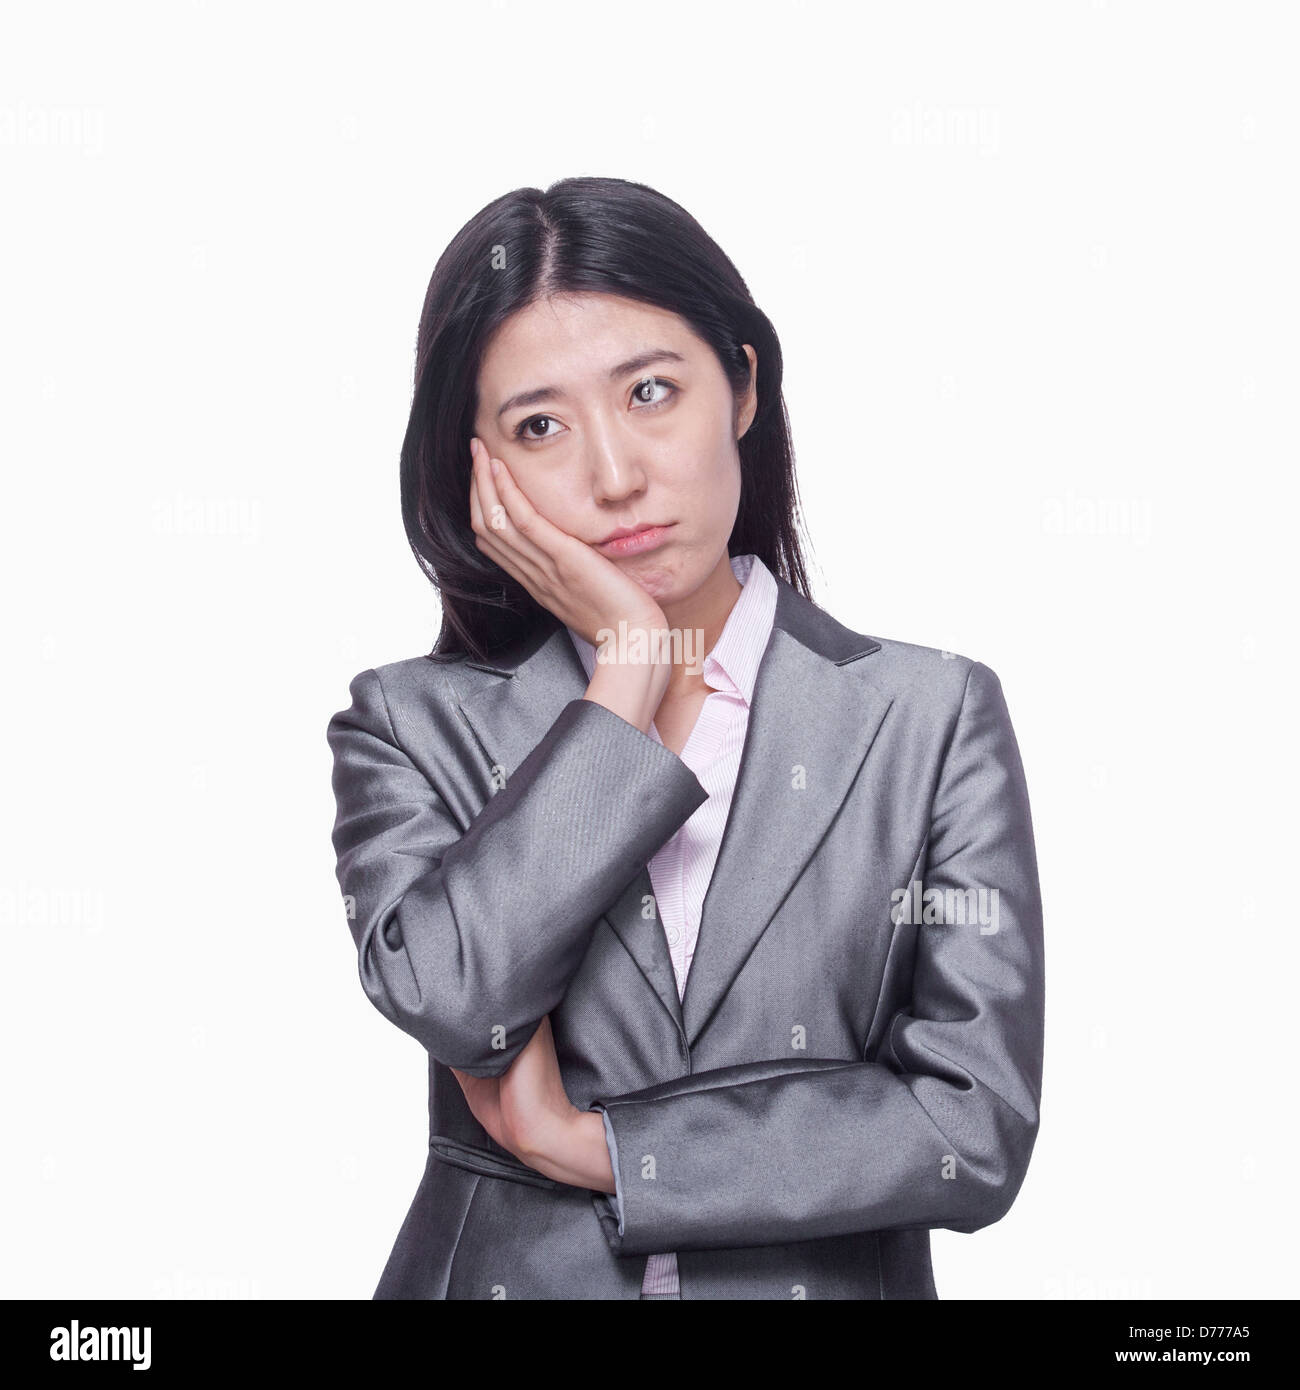 Businesswoman with sad expression Stock Photo